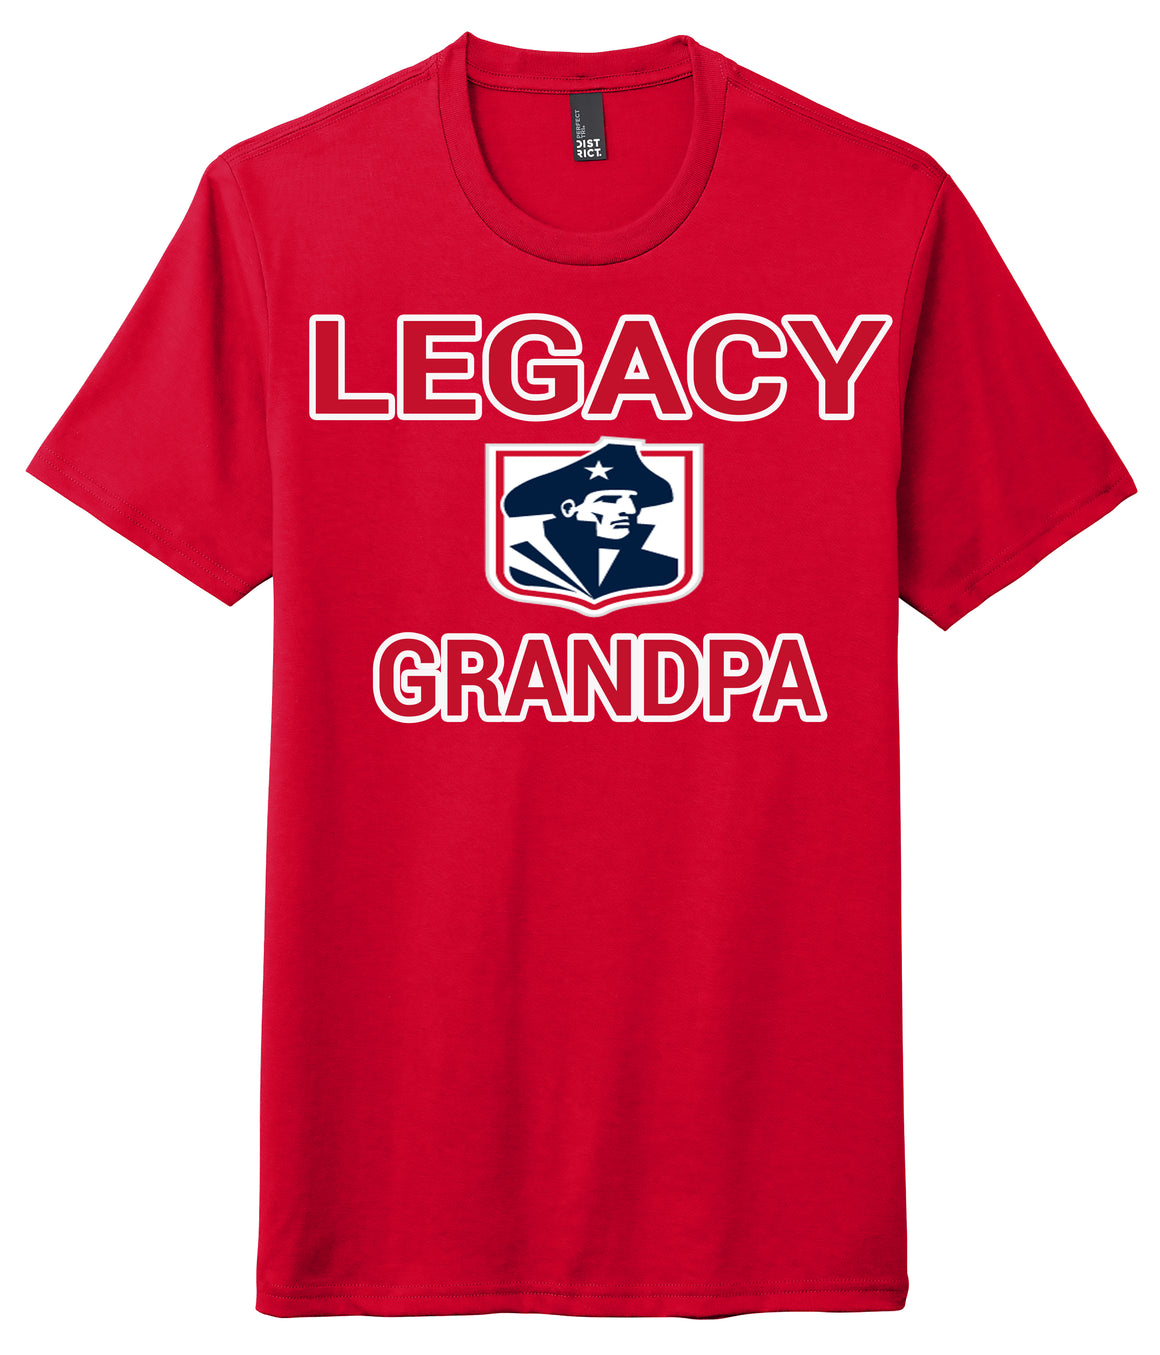 Legacy Traditional School Queen Creek - Grandpa Shirt